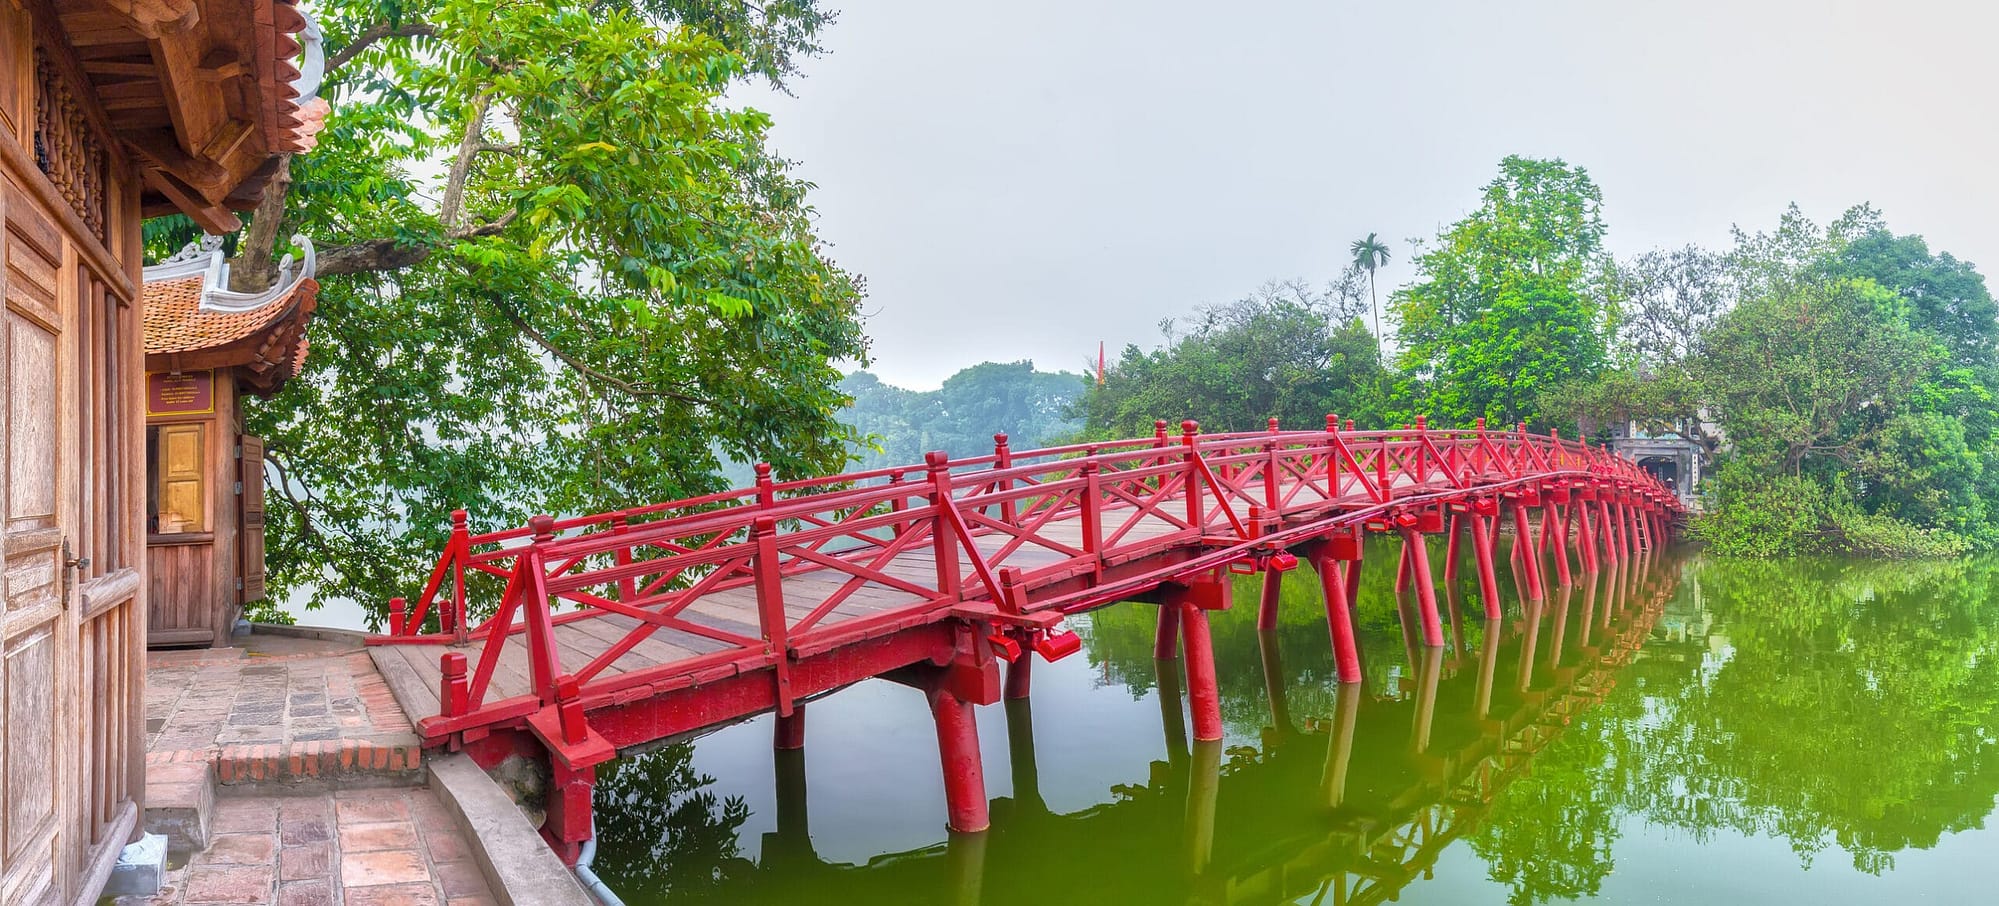 Huc Bridge spanning the Ngoc Son Temple, Hanoi, Vietnam with curved bridge architecture crawfish red symbolizes capital region thousands of years civilization, god temple tortoises enters Vietnam history